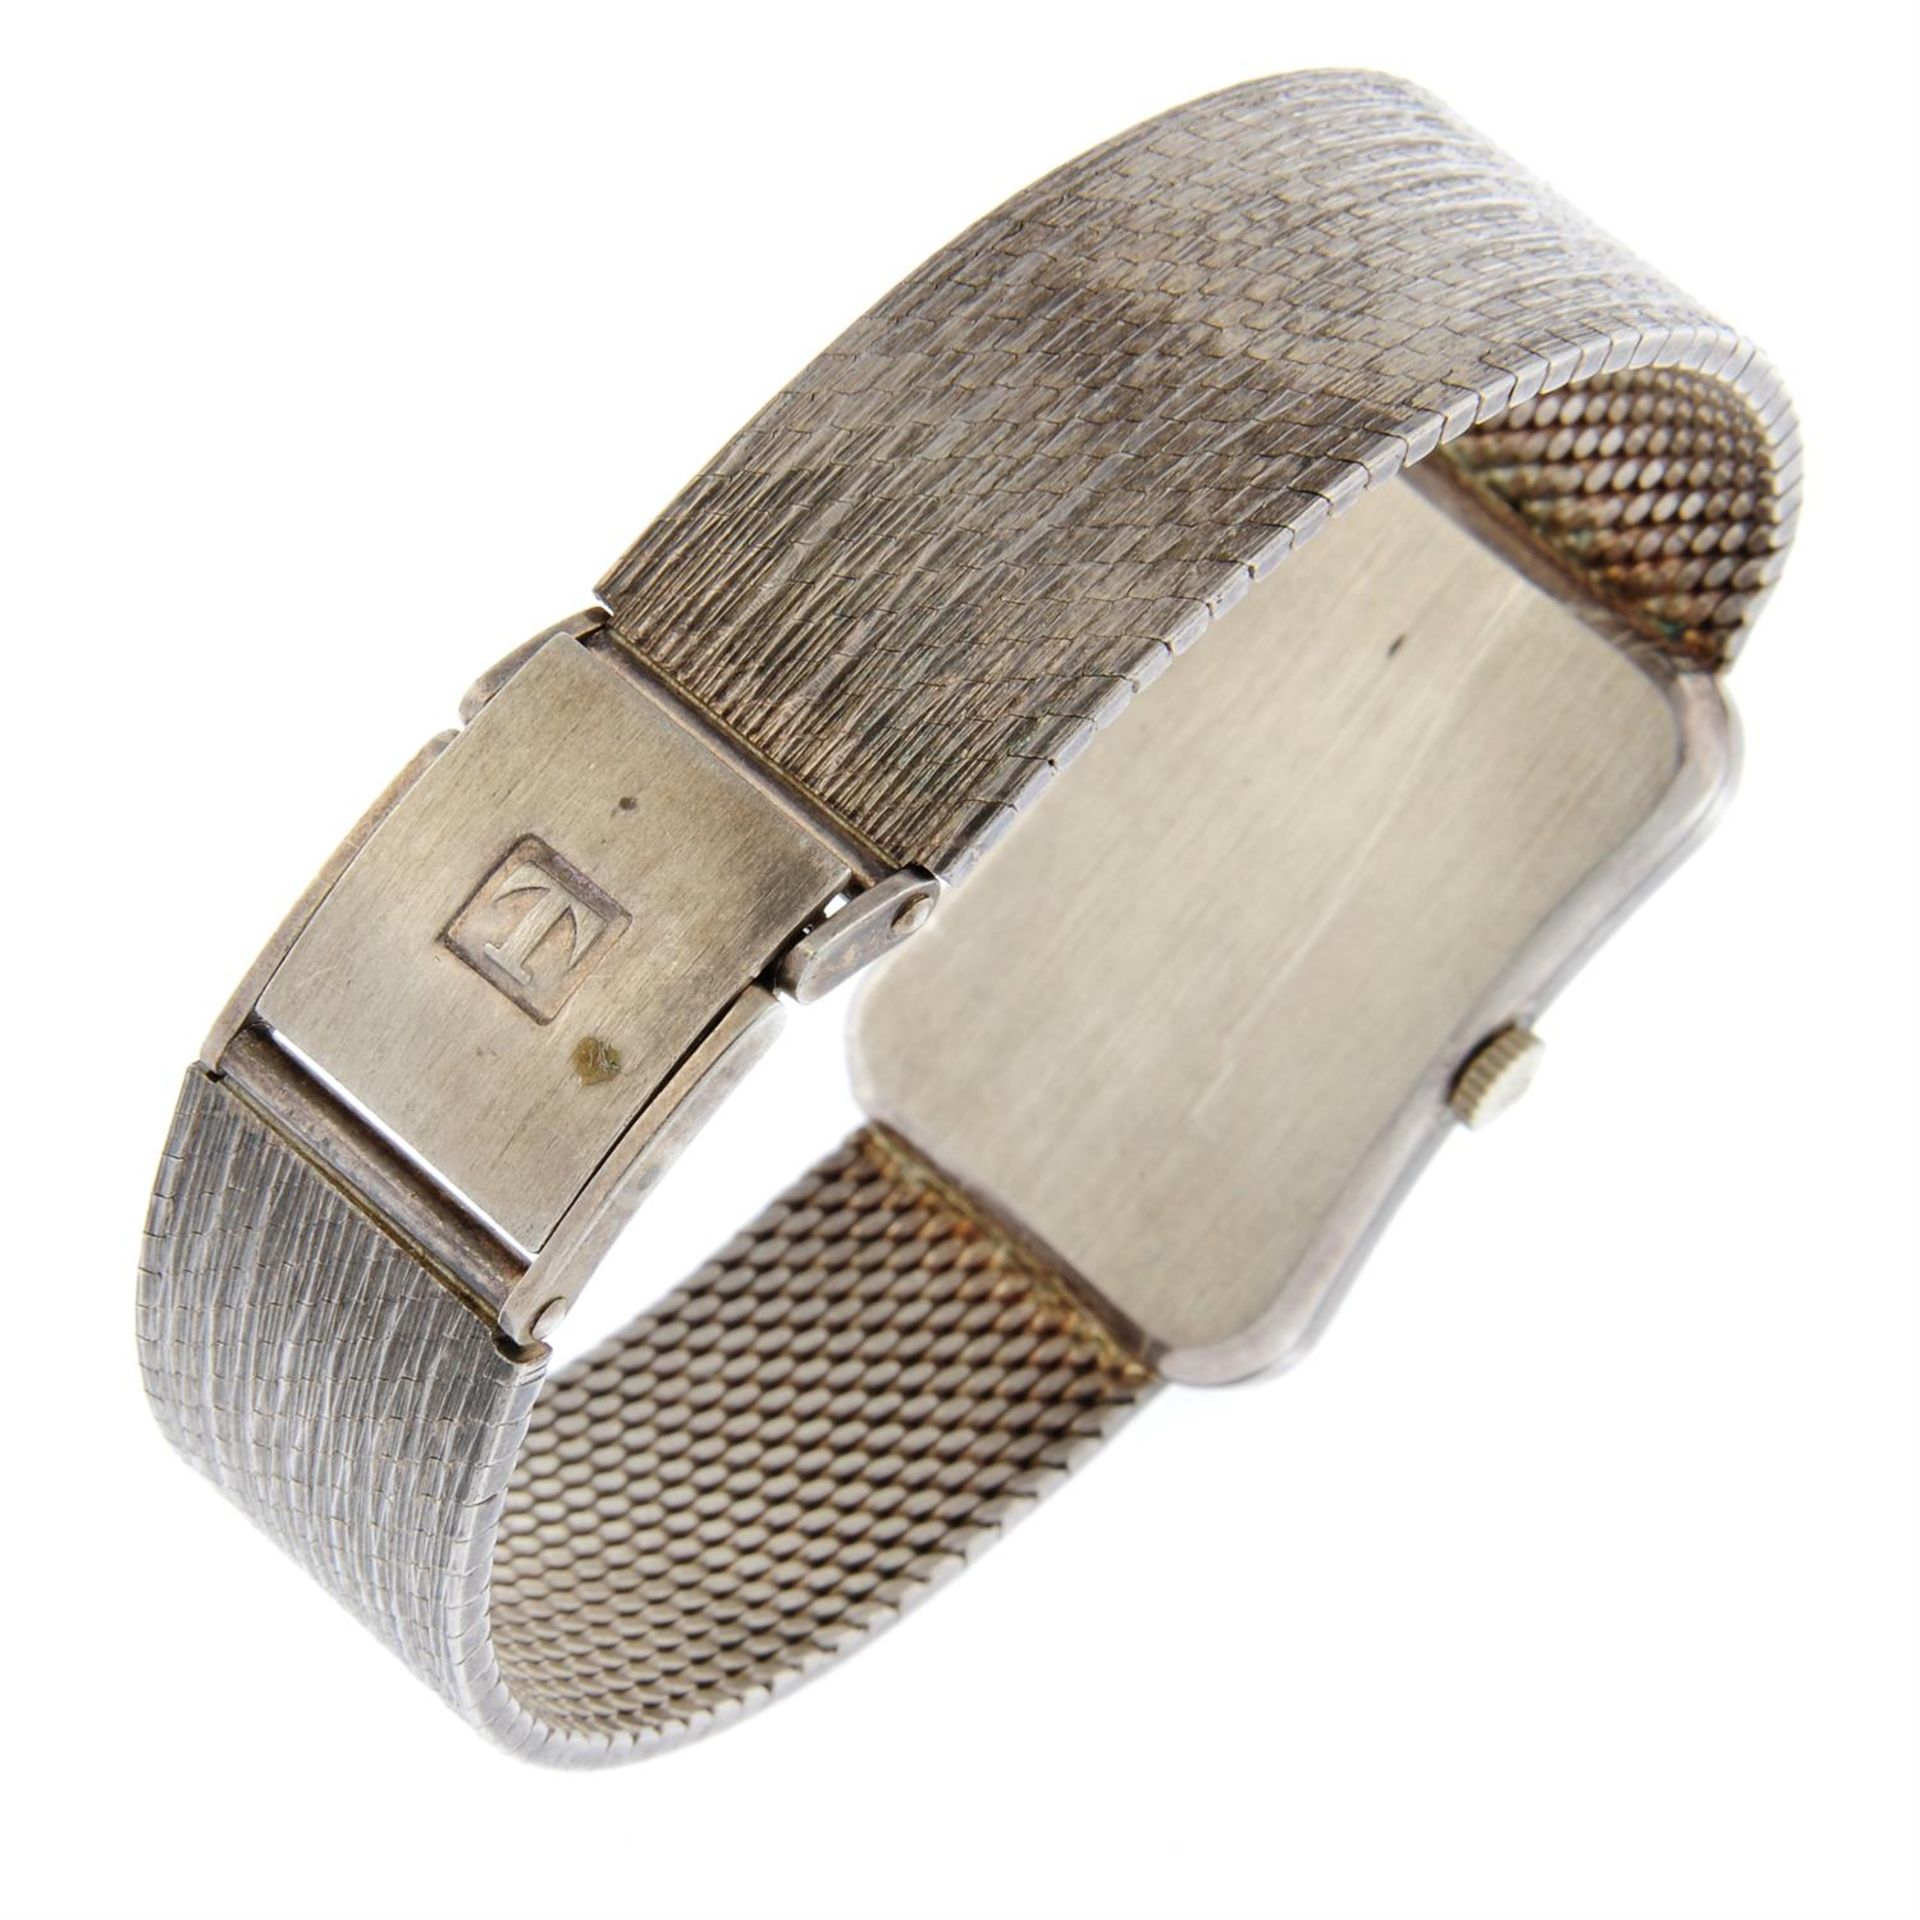 TISSOT - a silver bracelet watch, 21x33mm. - Image 2 of 4